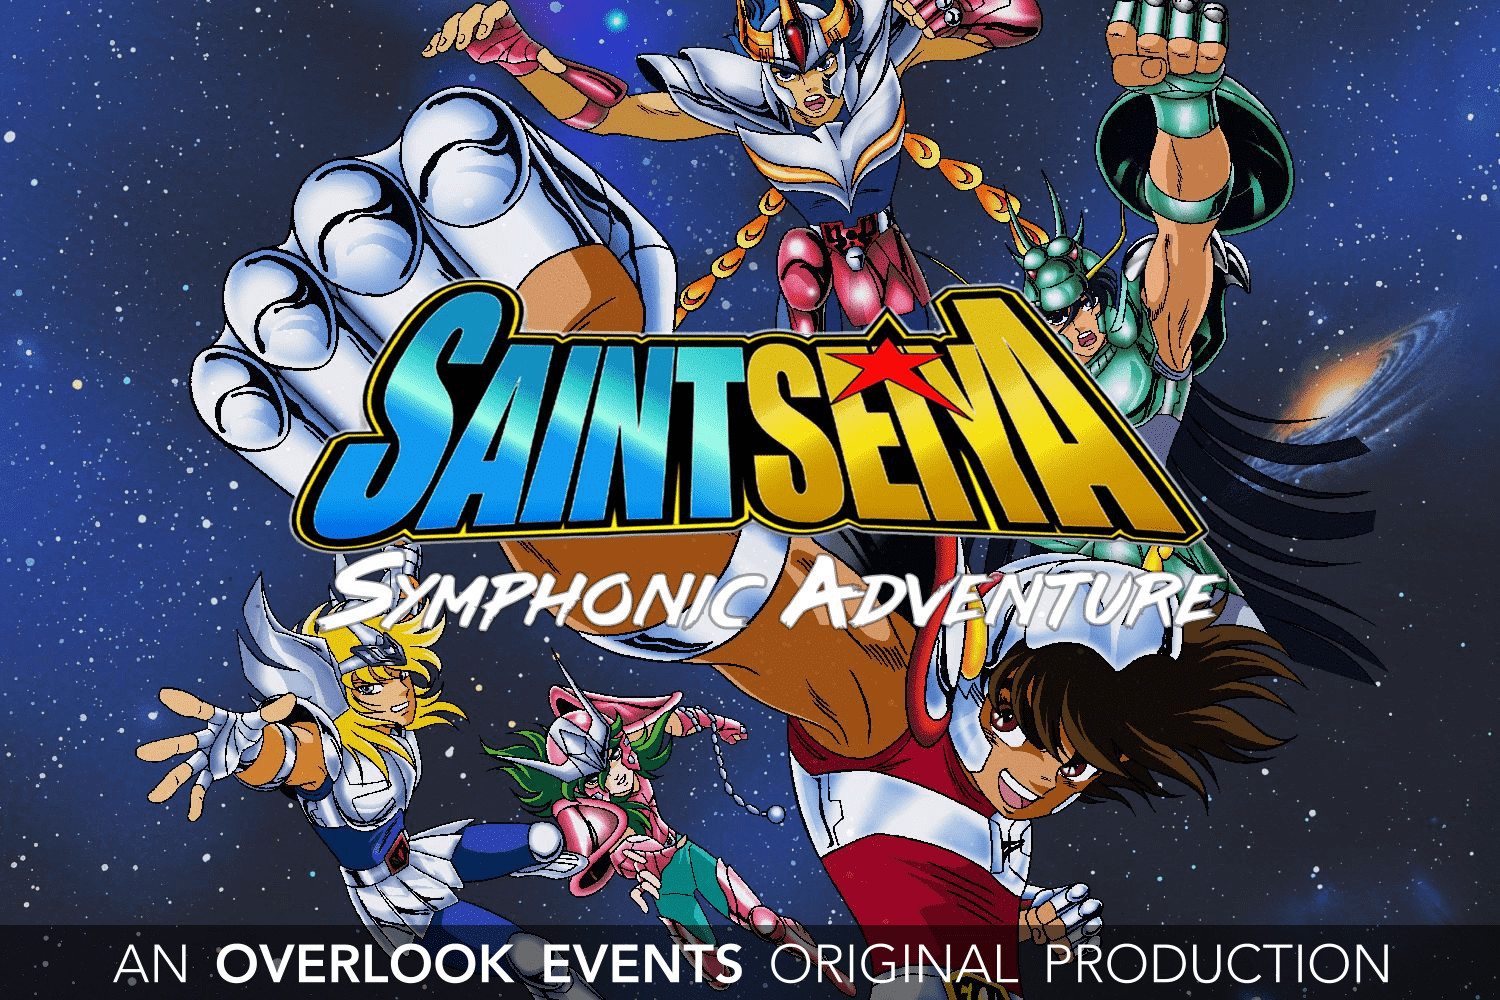 Saint Seiya Symphonic Adventure